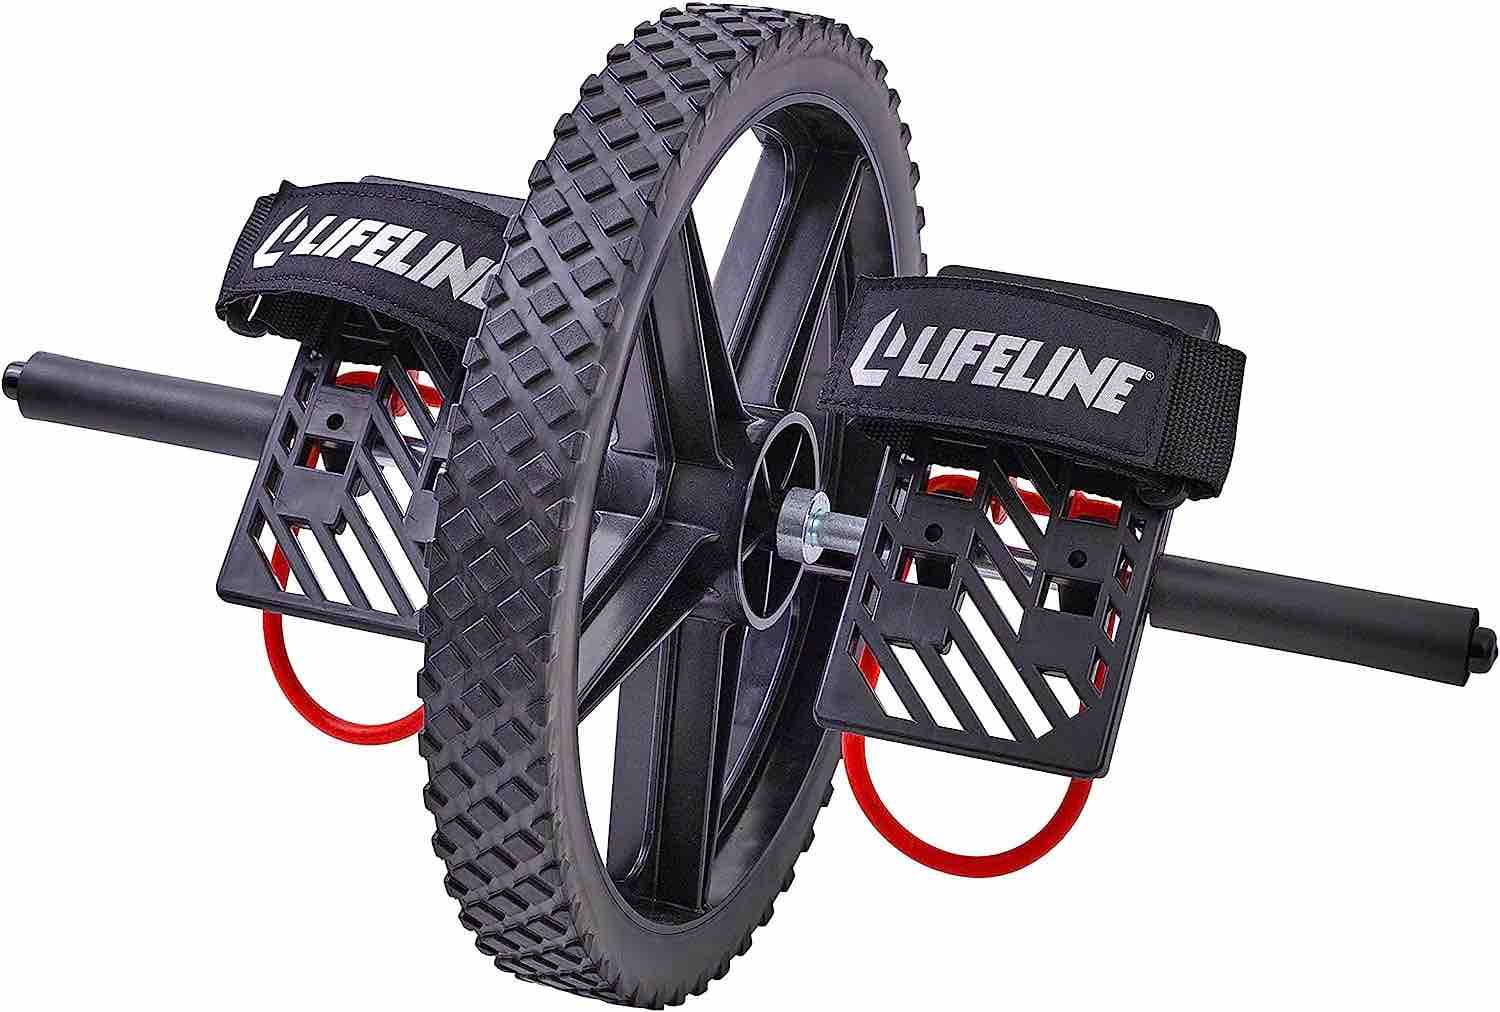 1. Lifeline Power Wheel - Best Overall